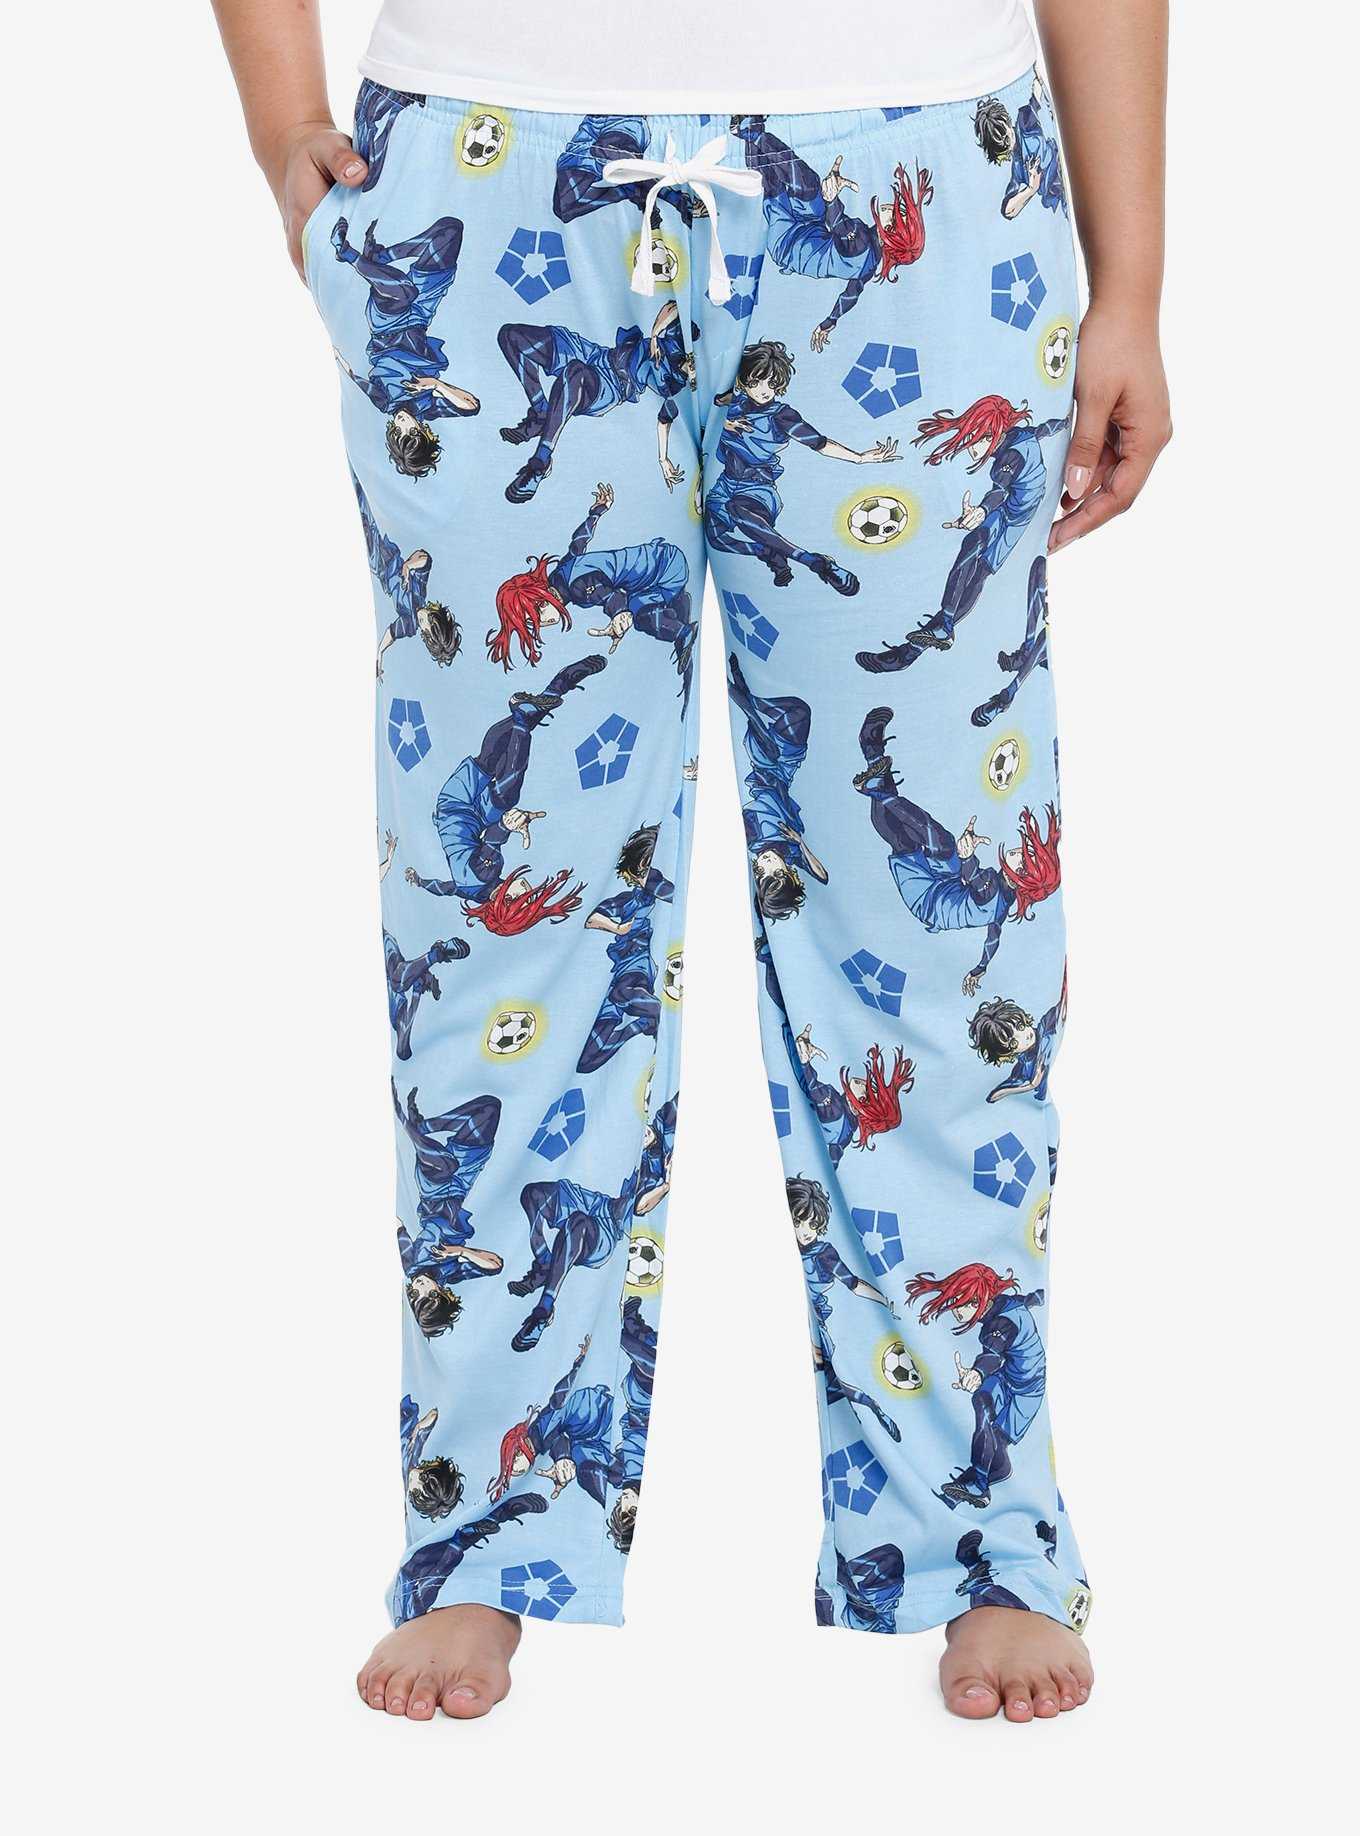 My Hero Academia Character & Logo Pajama Pants Plus Size Size 3X Hot Topic  NWT